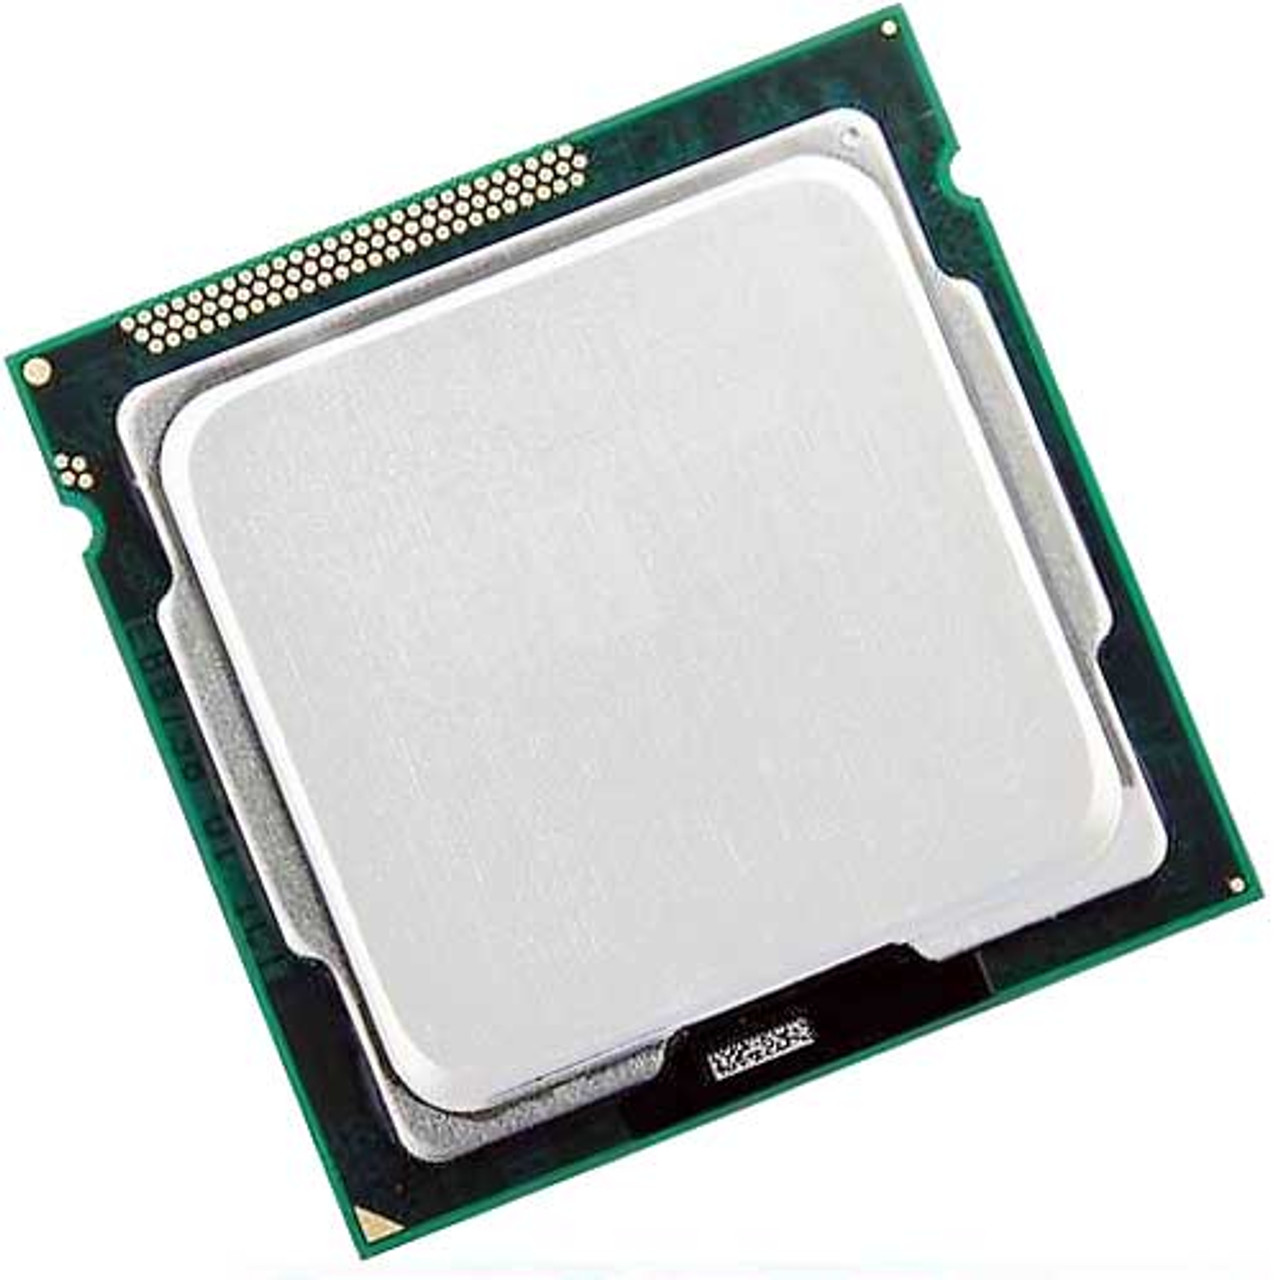 Intel Xeon UP Quad-core X3430 2.40GHz Processor BV80605001914AG UPC 675901017343 - BV80605001914AG